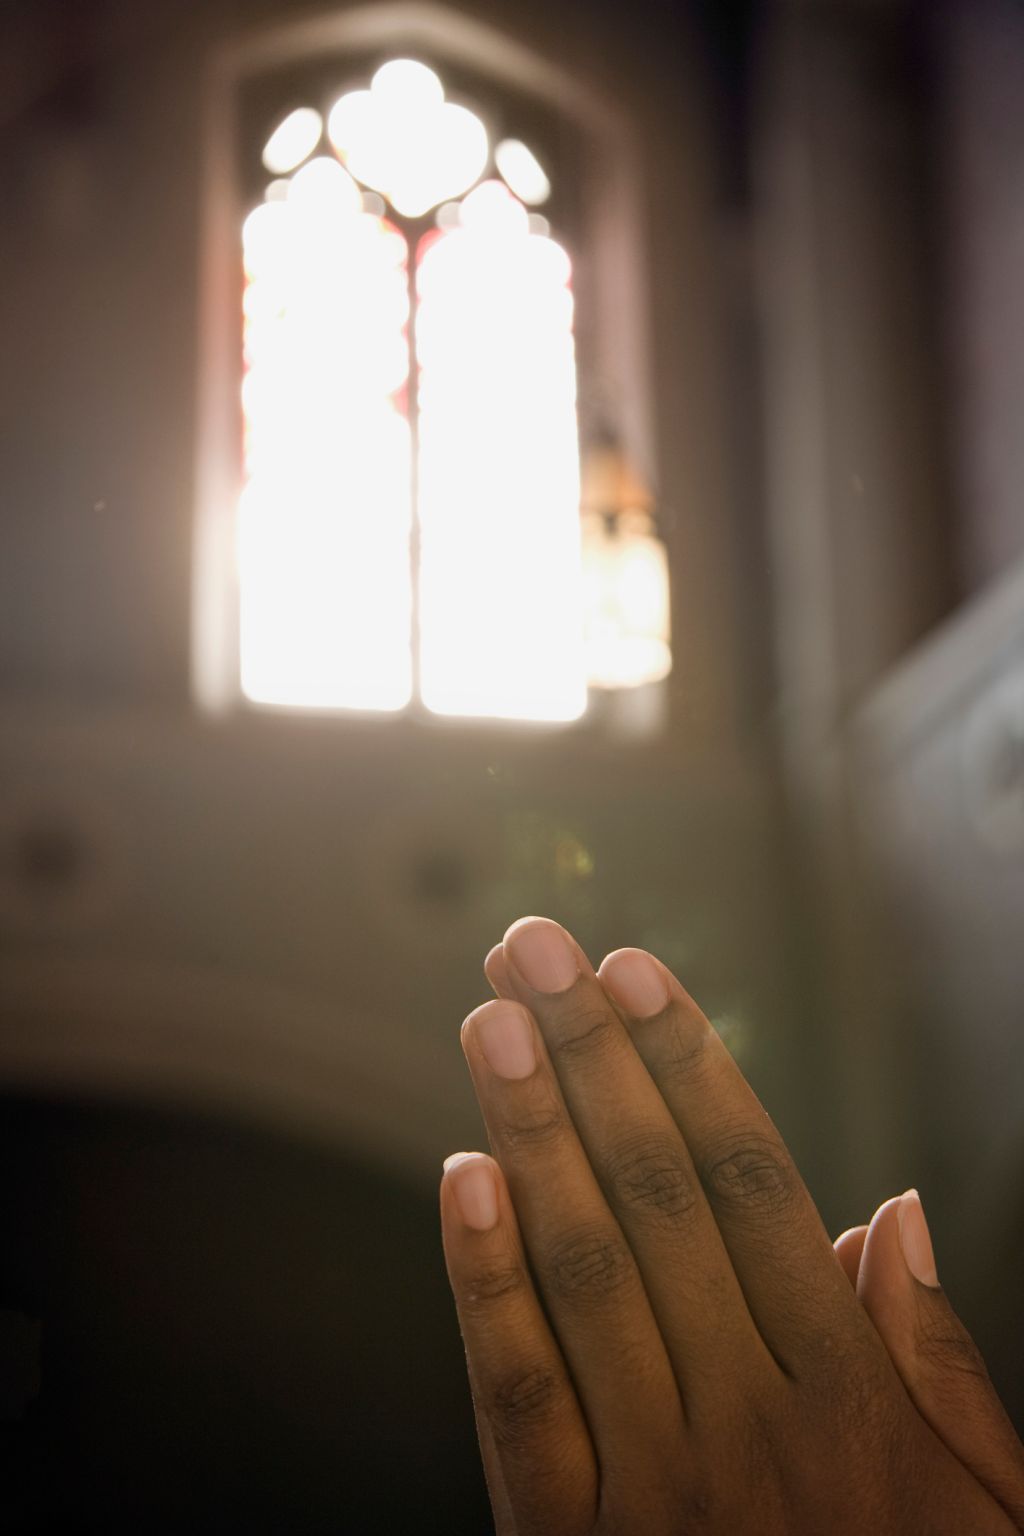 African lady praying in church